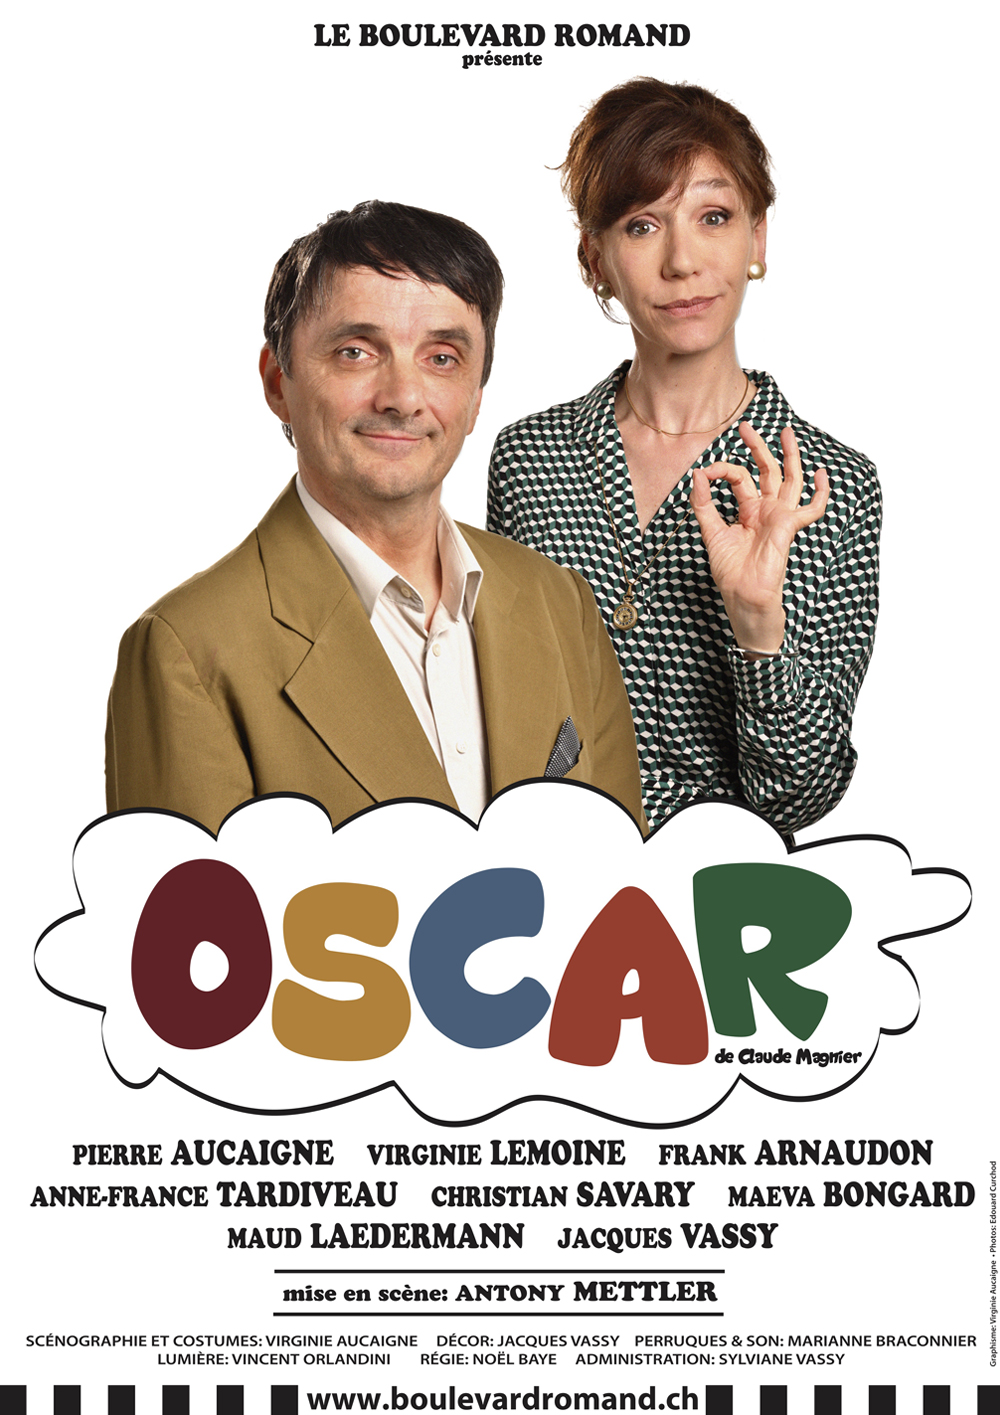 Oscar - Les Amis du Boulevard Romand